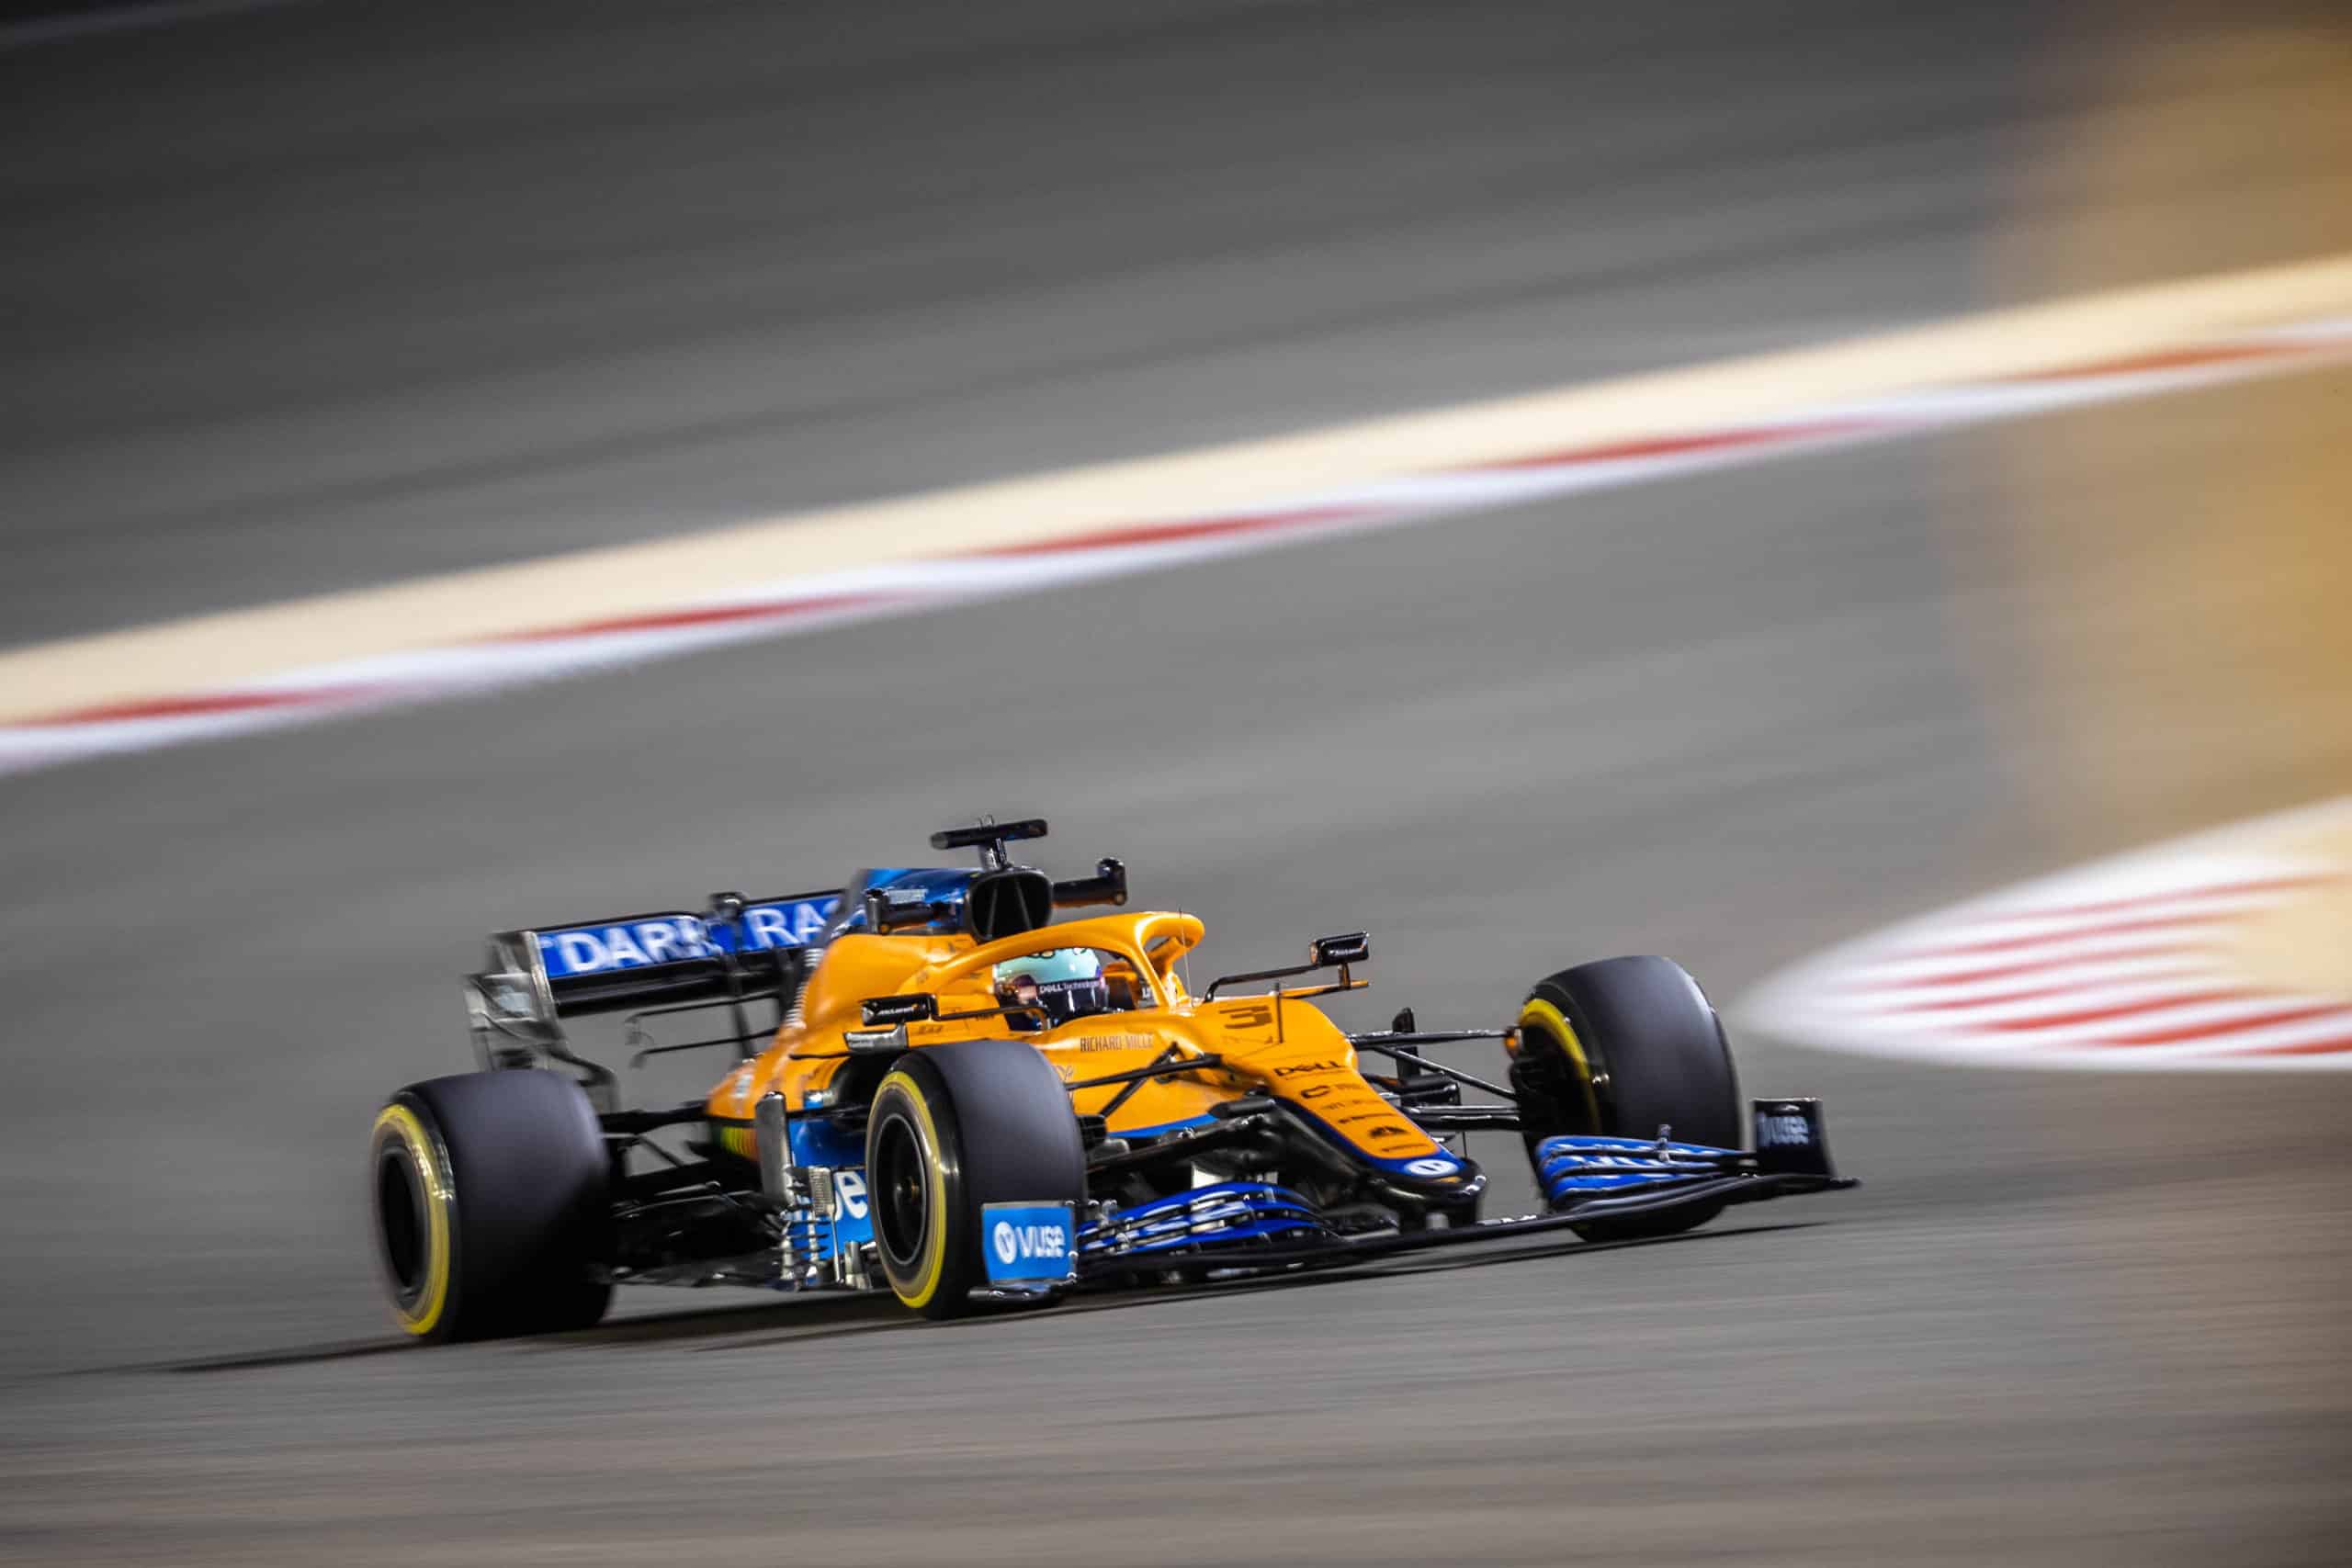 Daniel-Ricciardo-on-track-ahead-of-the-2021-Bahrain-Grand-Prix